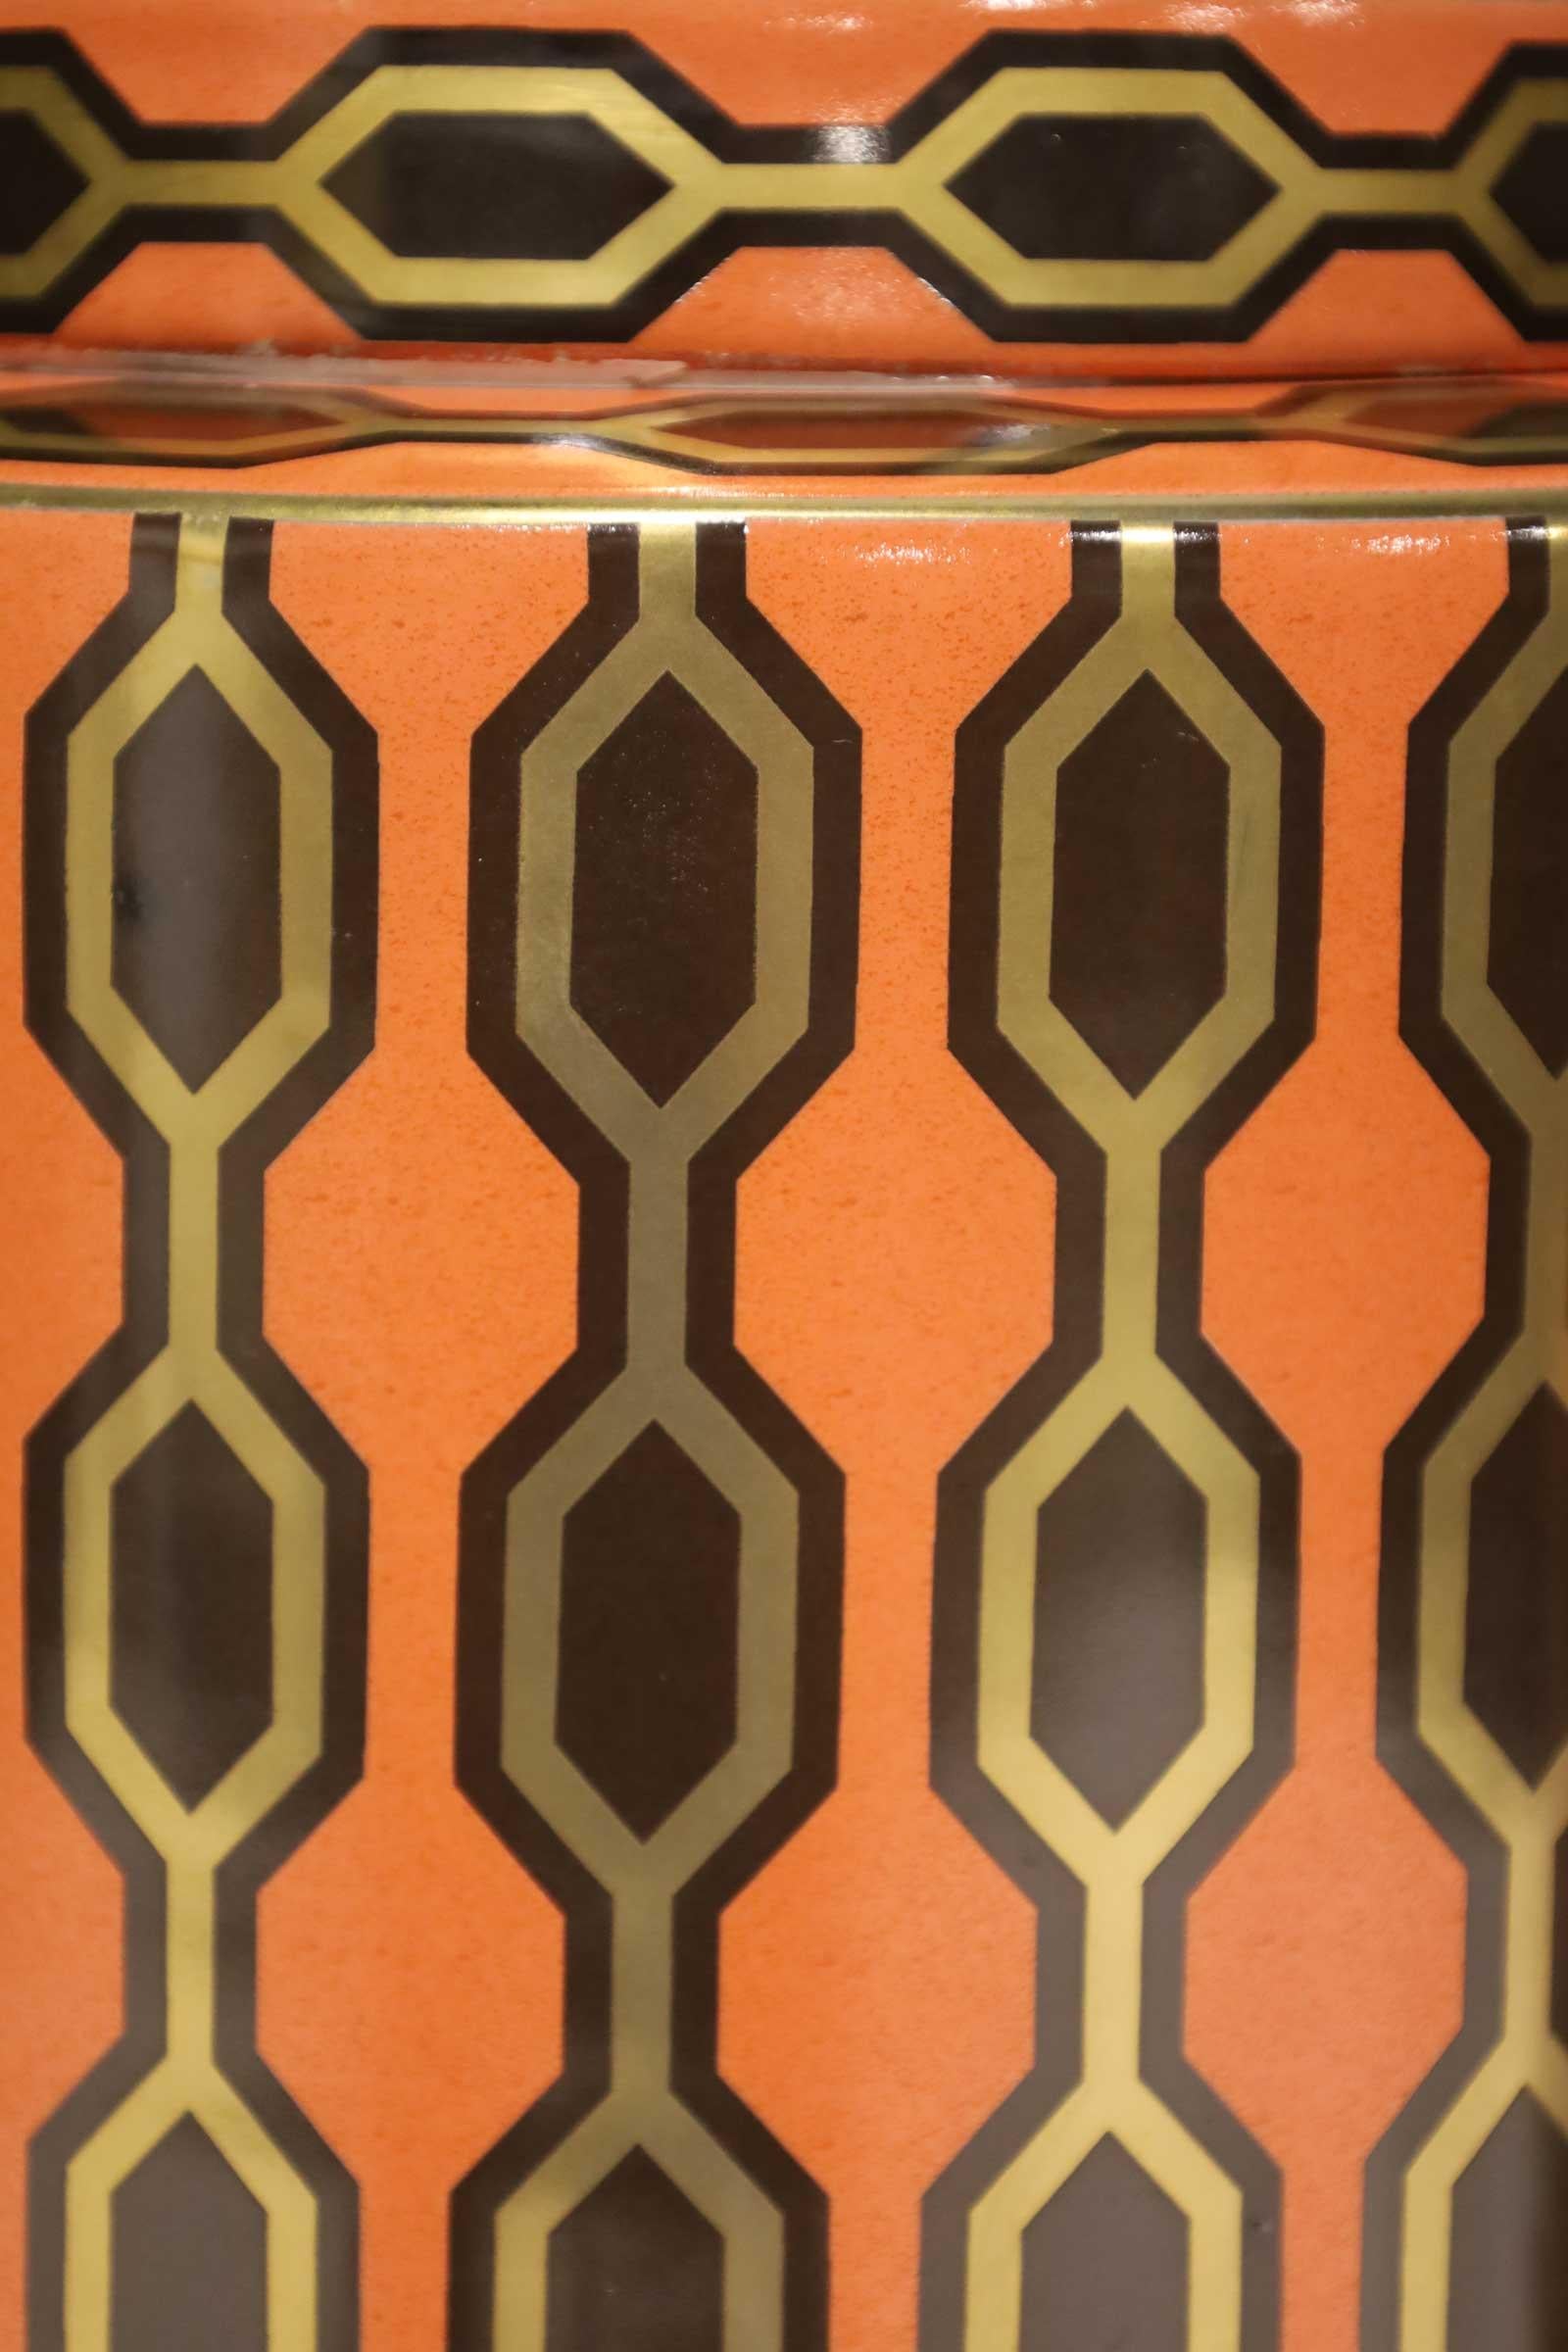 Kelly Hoppen Porcelain Tea Jar Lamps in Orange, Gold and Brown Geometric Pattern For Sale 1